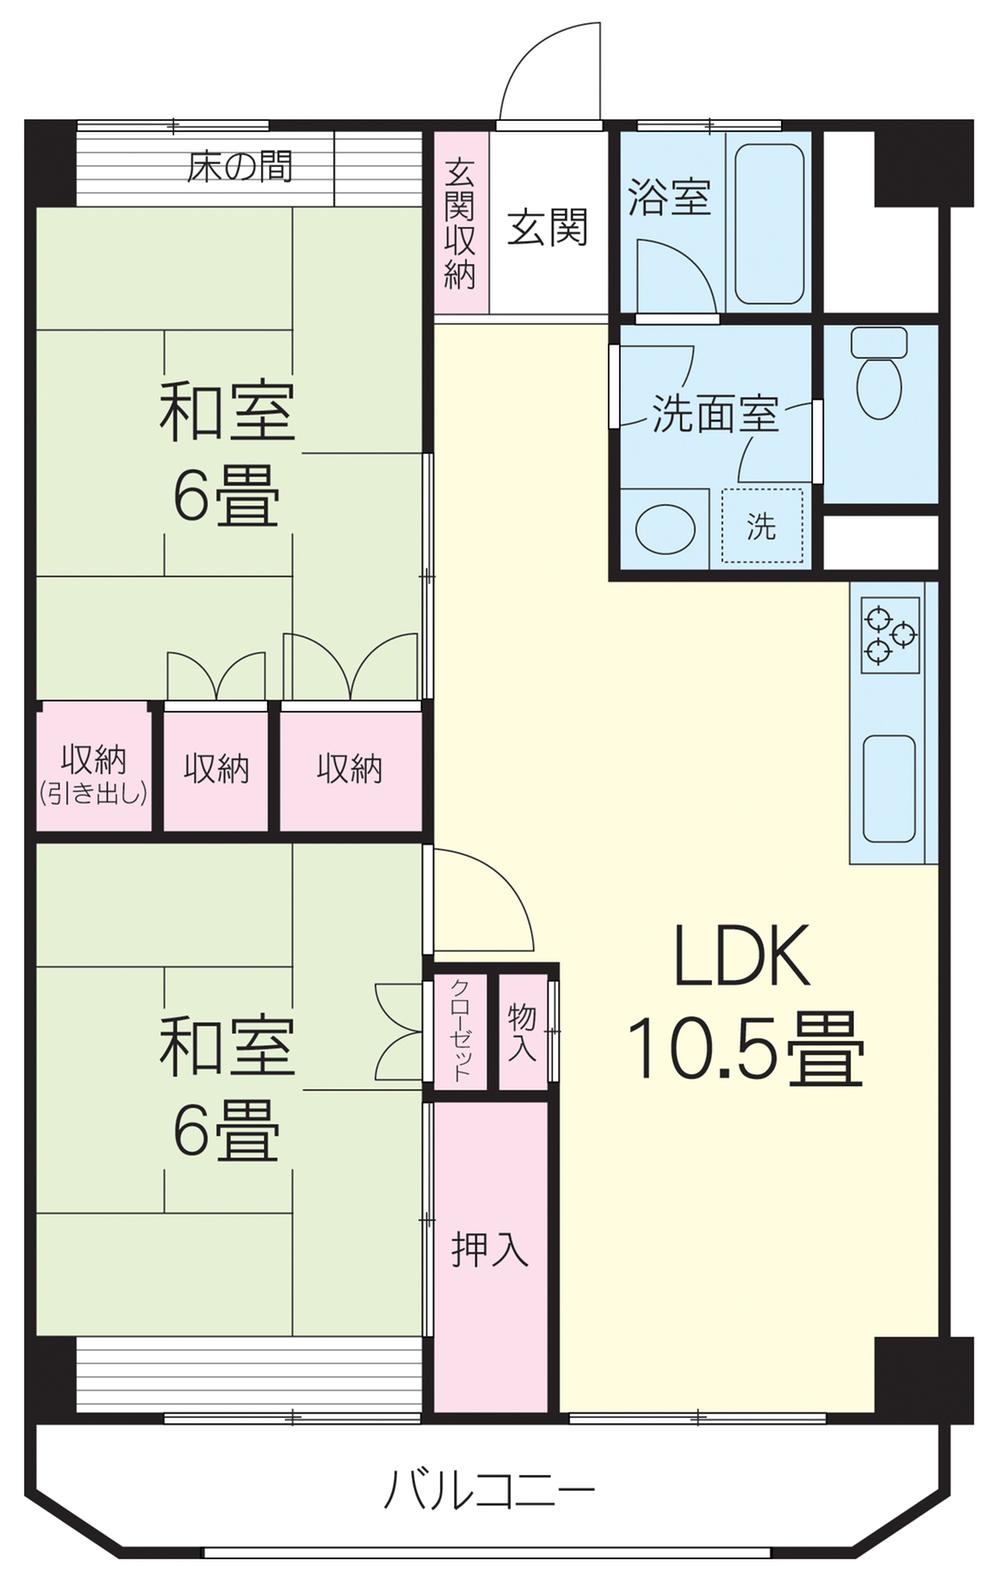 Floor plan. 2LDK, Price 7.5 million yen, Occupied area 58.24 sq m , Balcony area 6.17 sq m